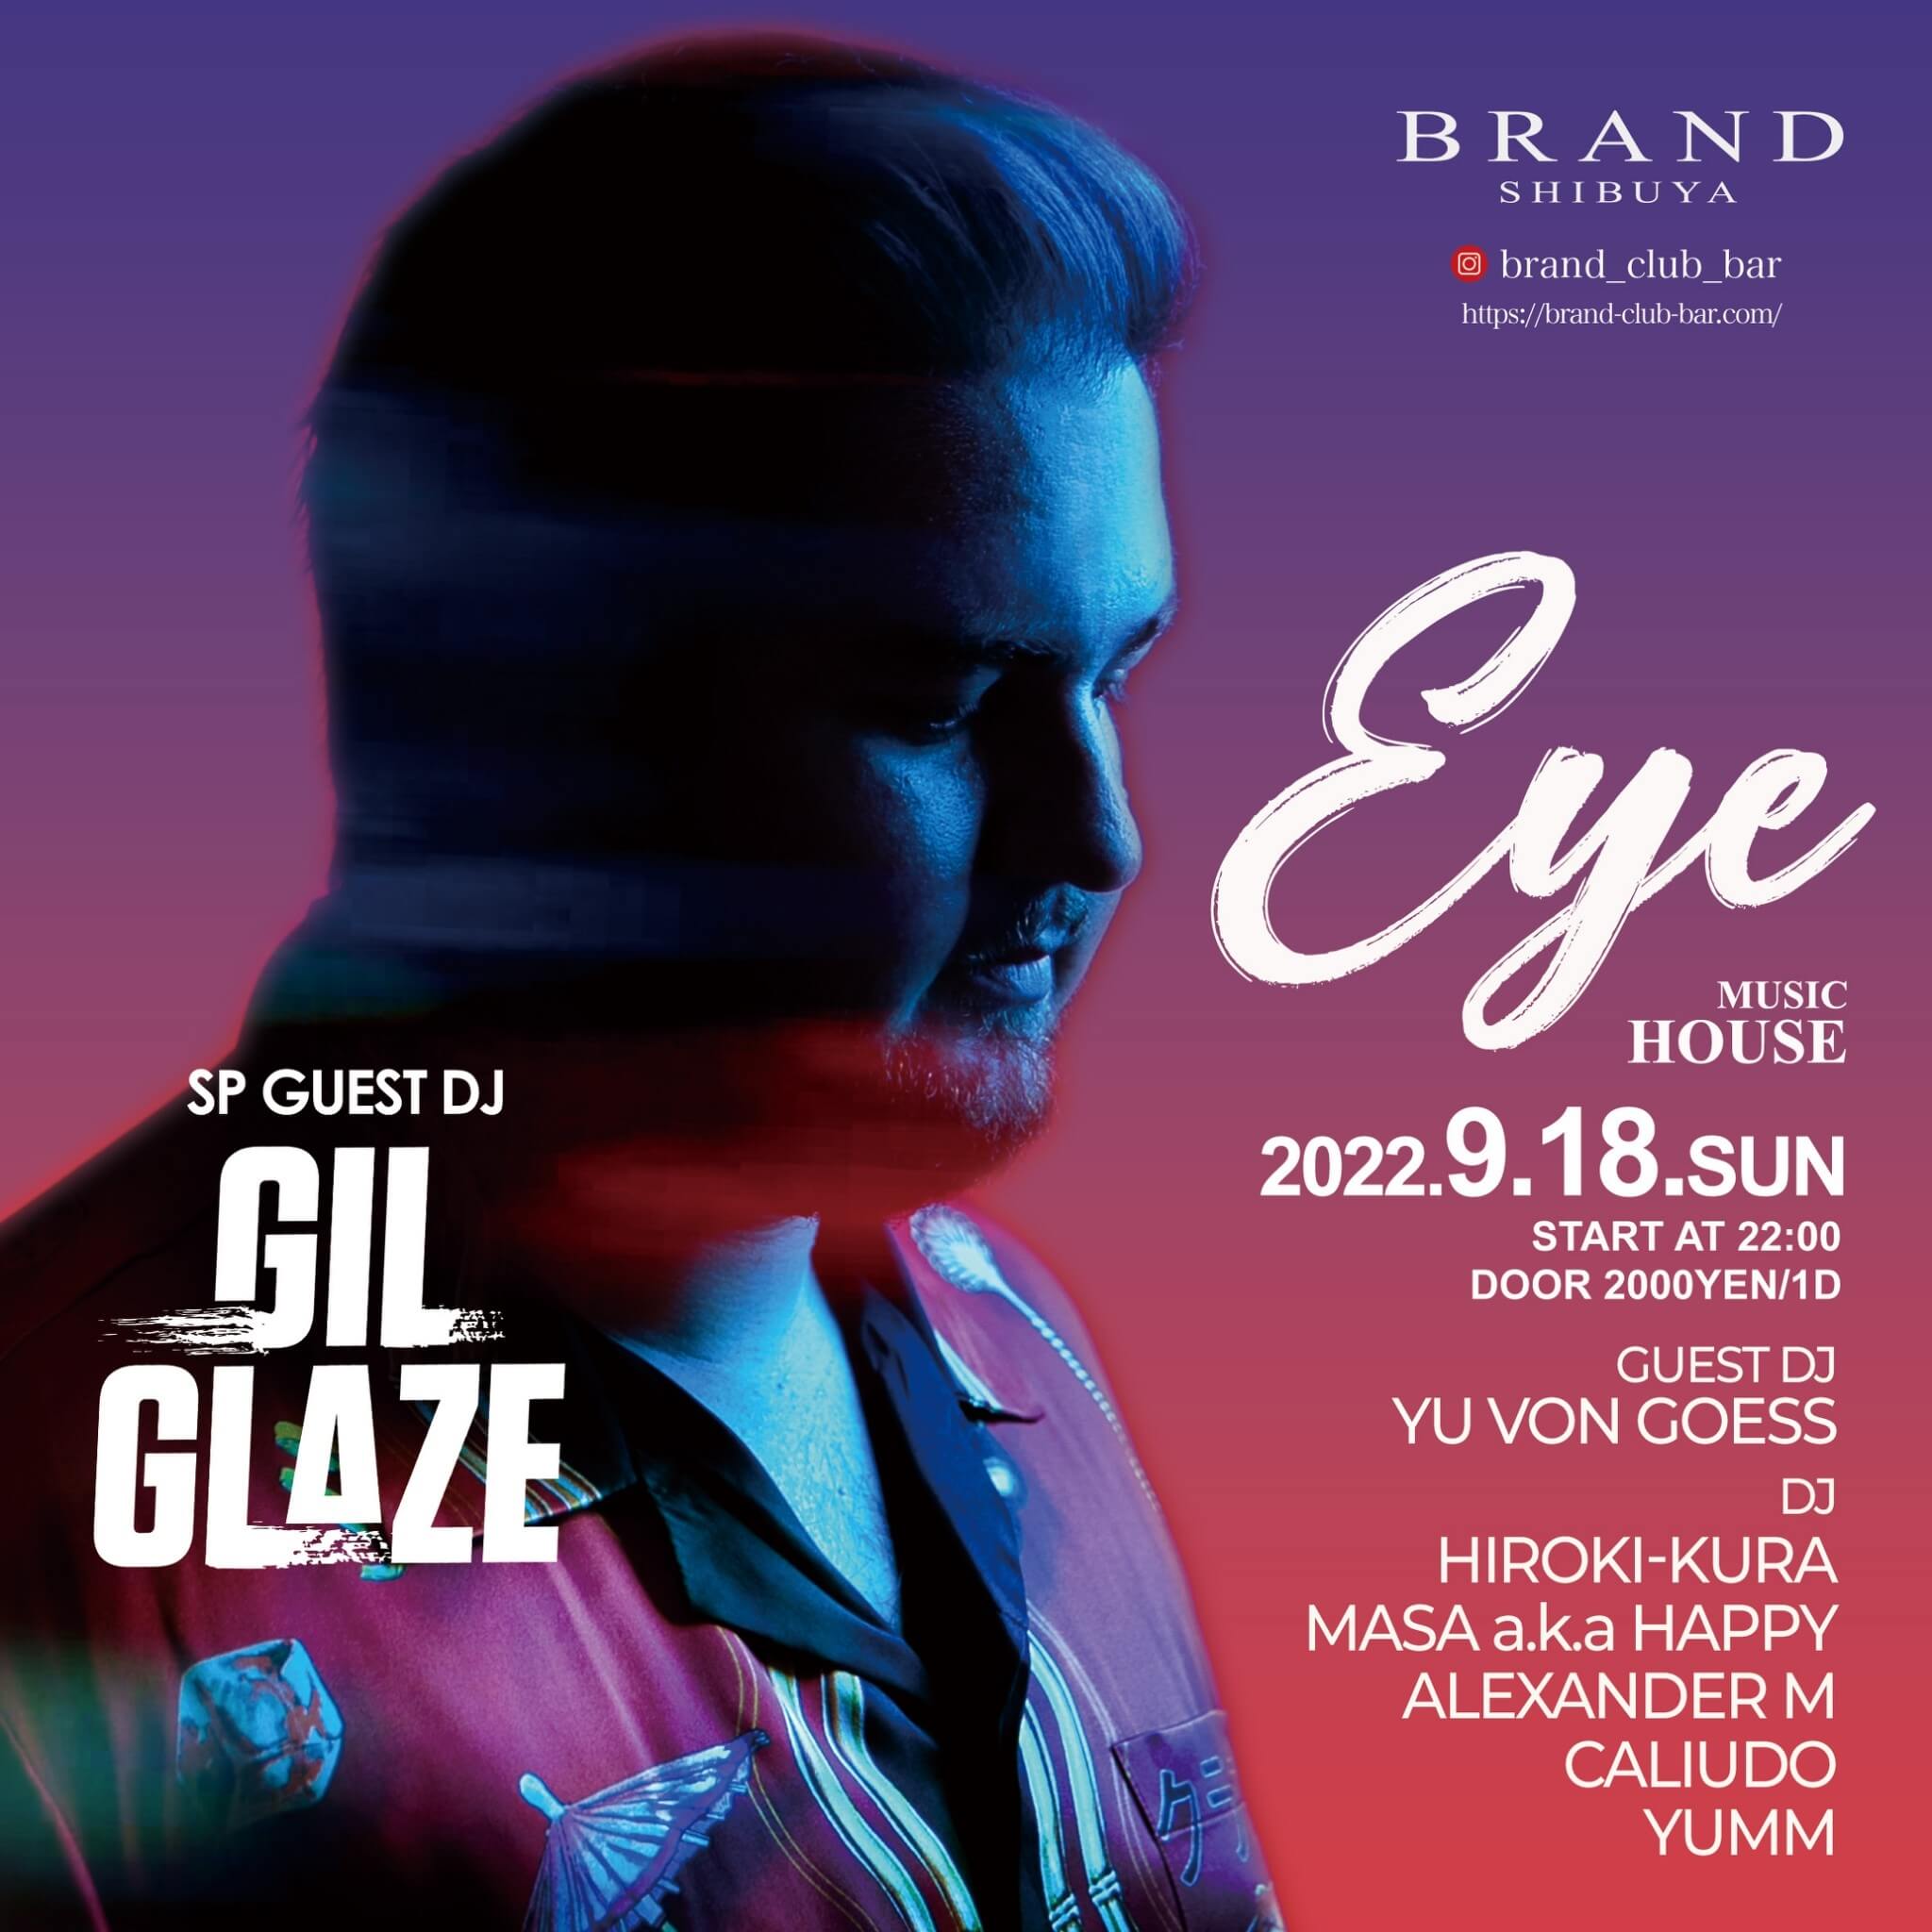 【EYE】 -SP GUEST DJ-  GIL GLAZE
 2022年09月18日（日曜日）に渋谷 クラブのBRAND SHIBUYAで開催されるHOUSEイベント